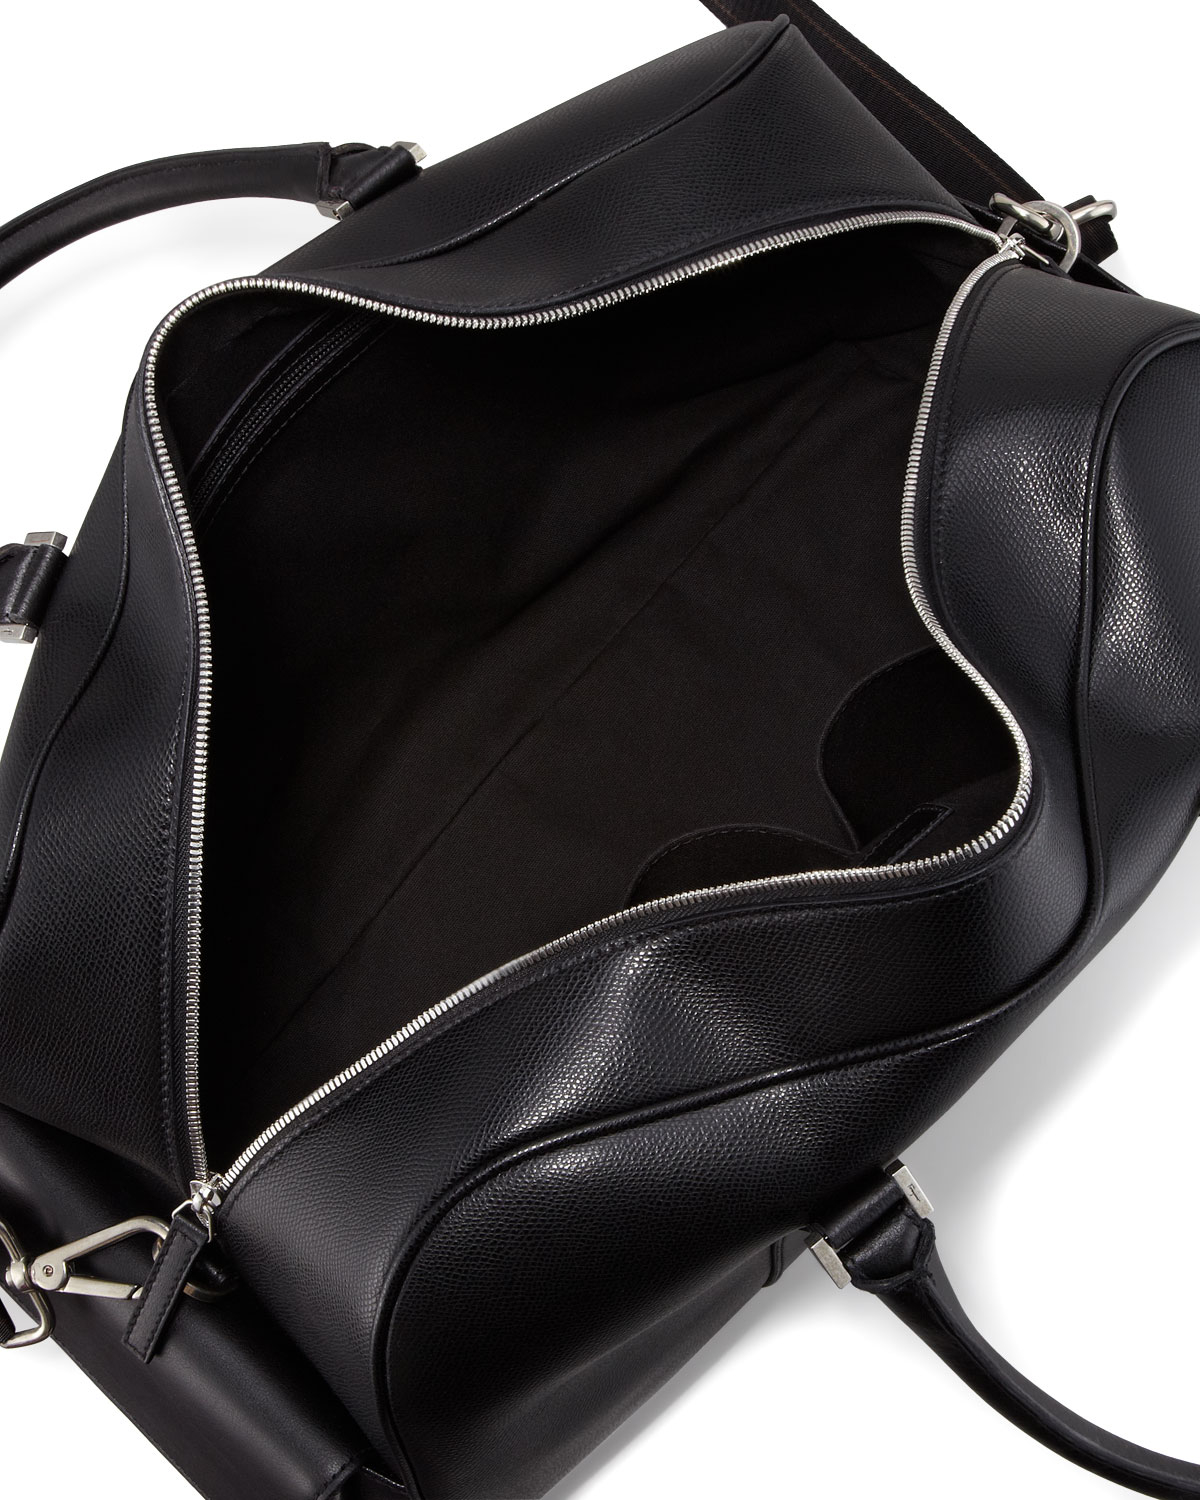 Lyst - Ferragamo Los Angeles Mens Duffle Bag in Black for Men